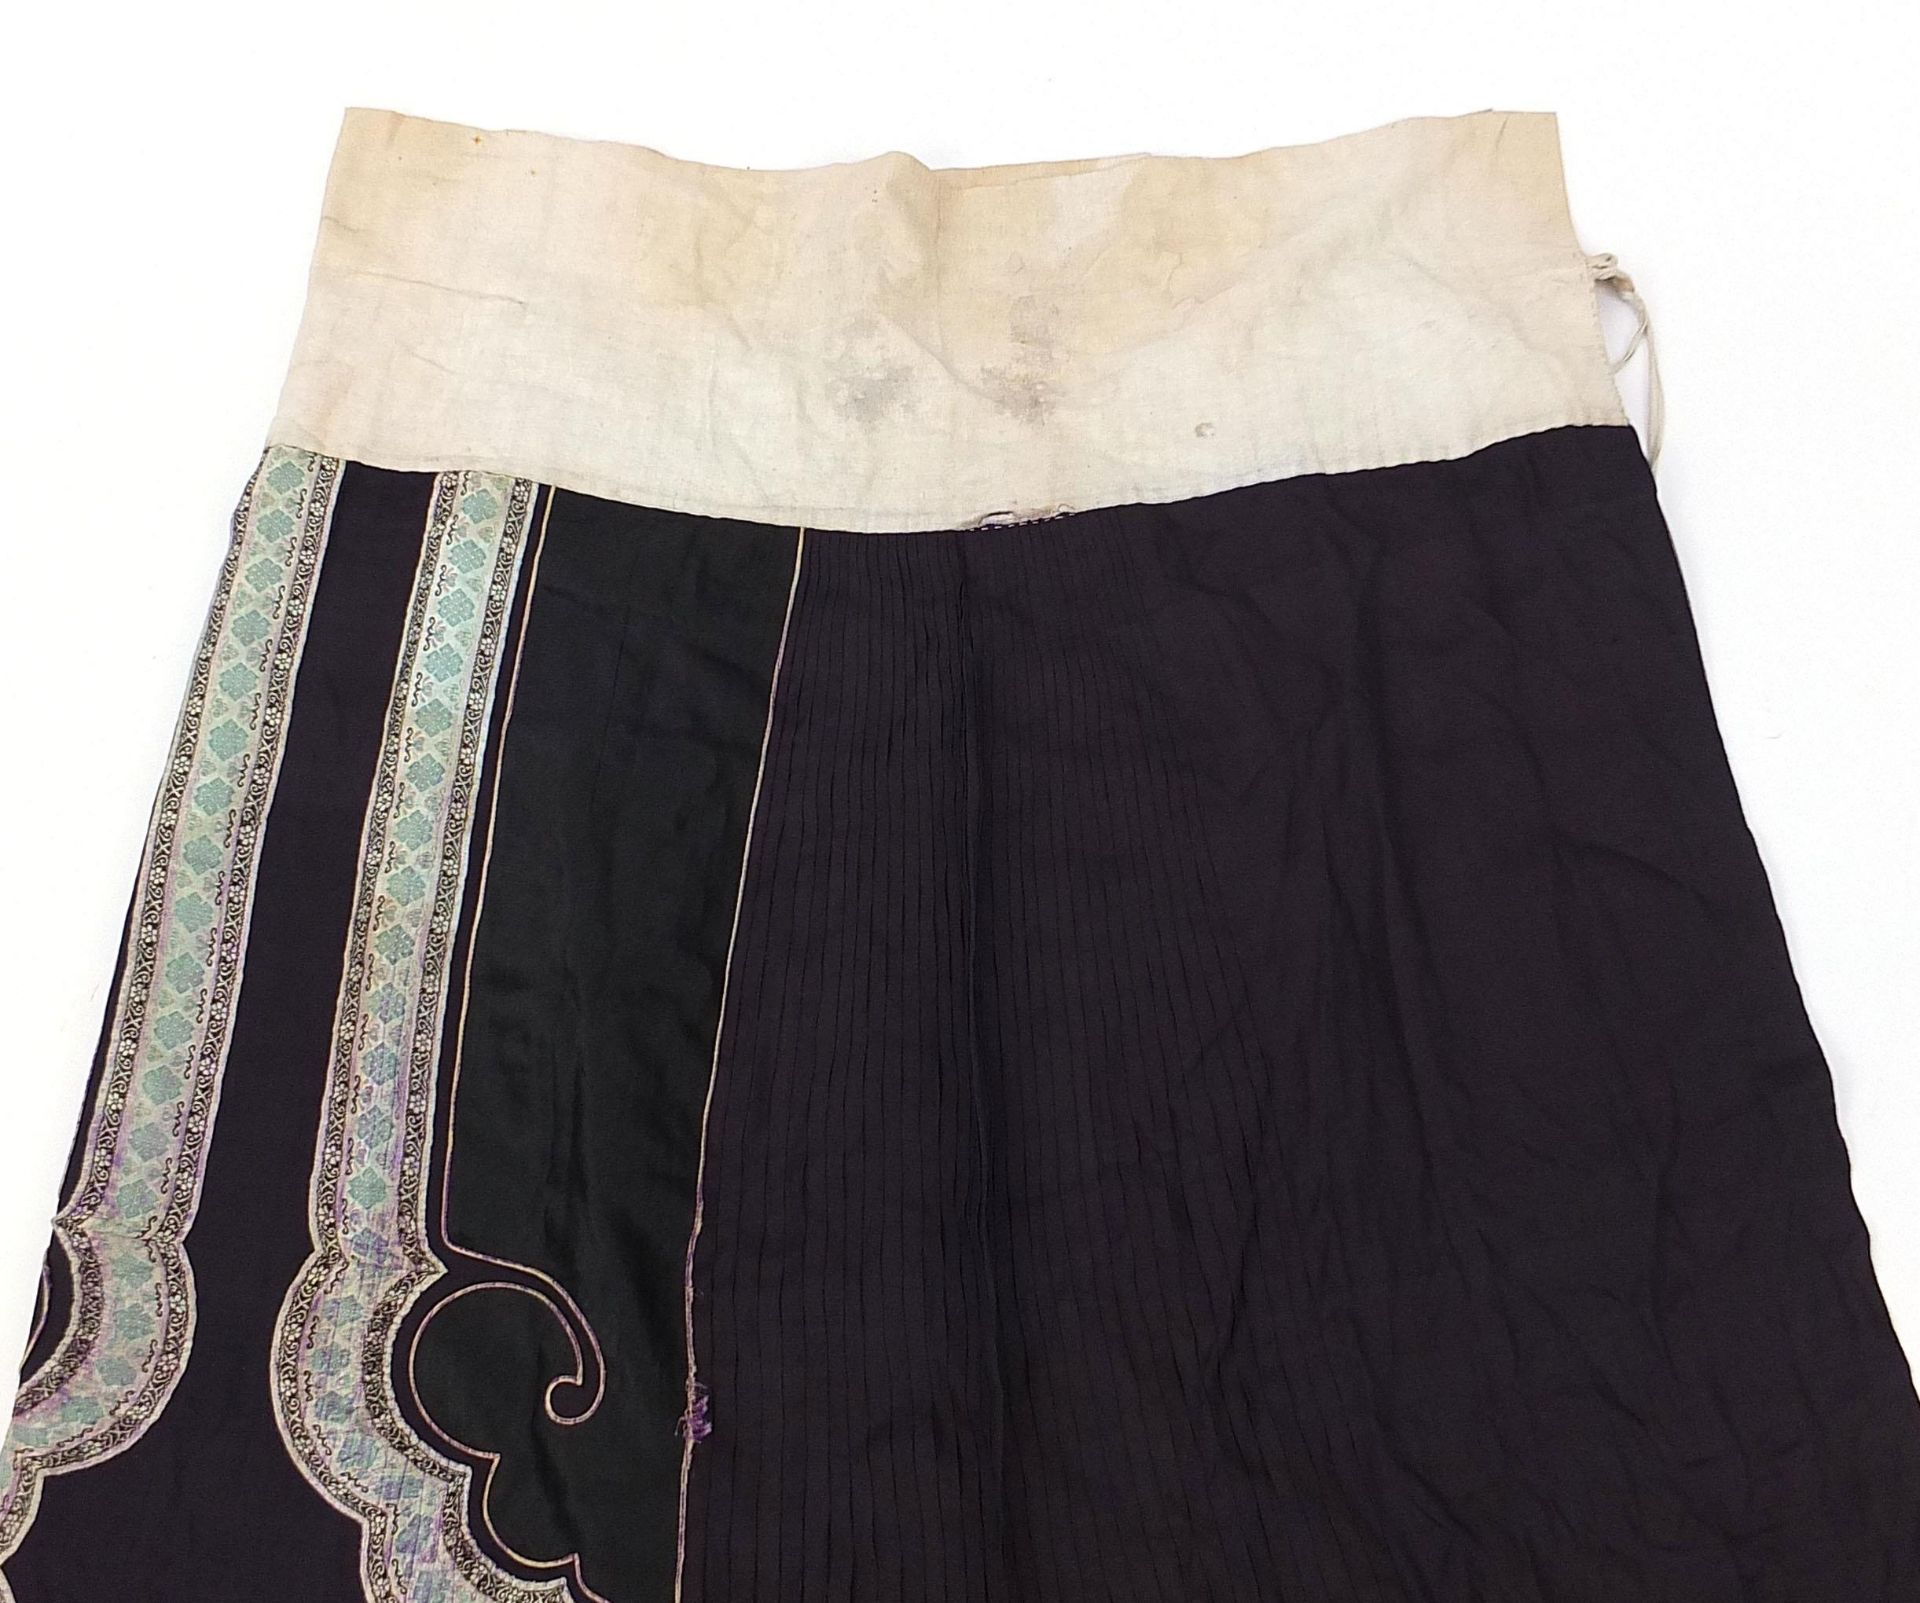 Chinese silk embroidered skirt with floral motifs, 98cm high - Bild 7 aus 9